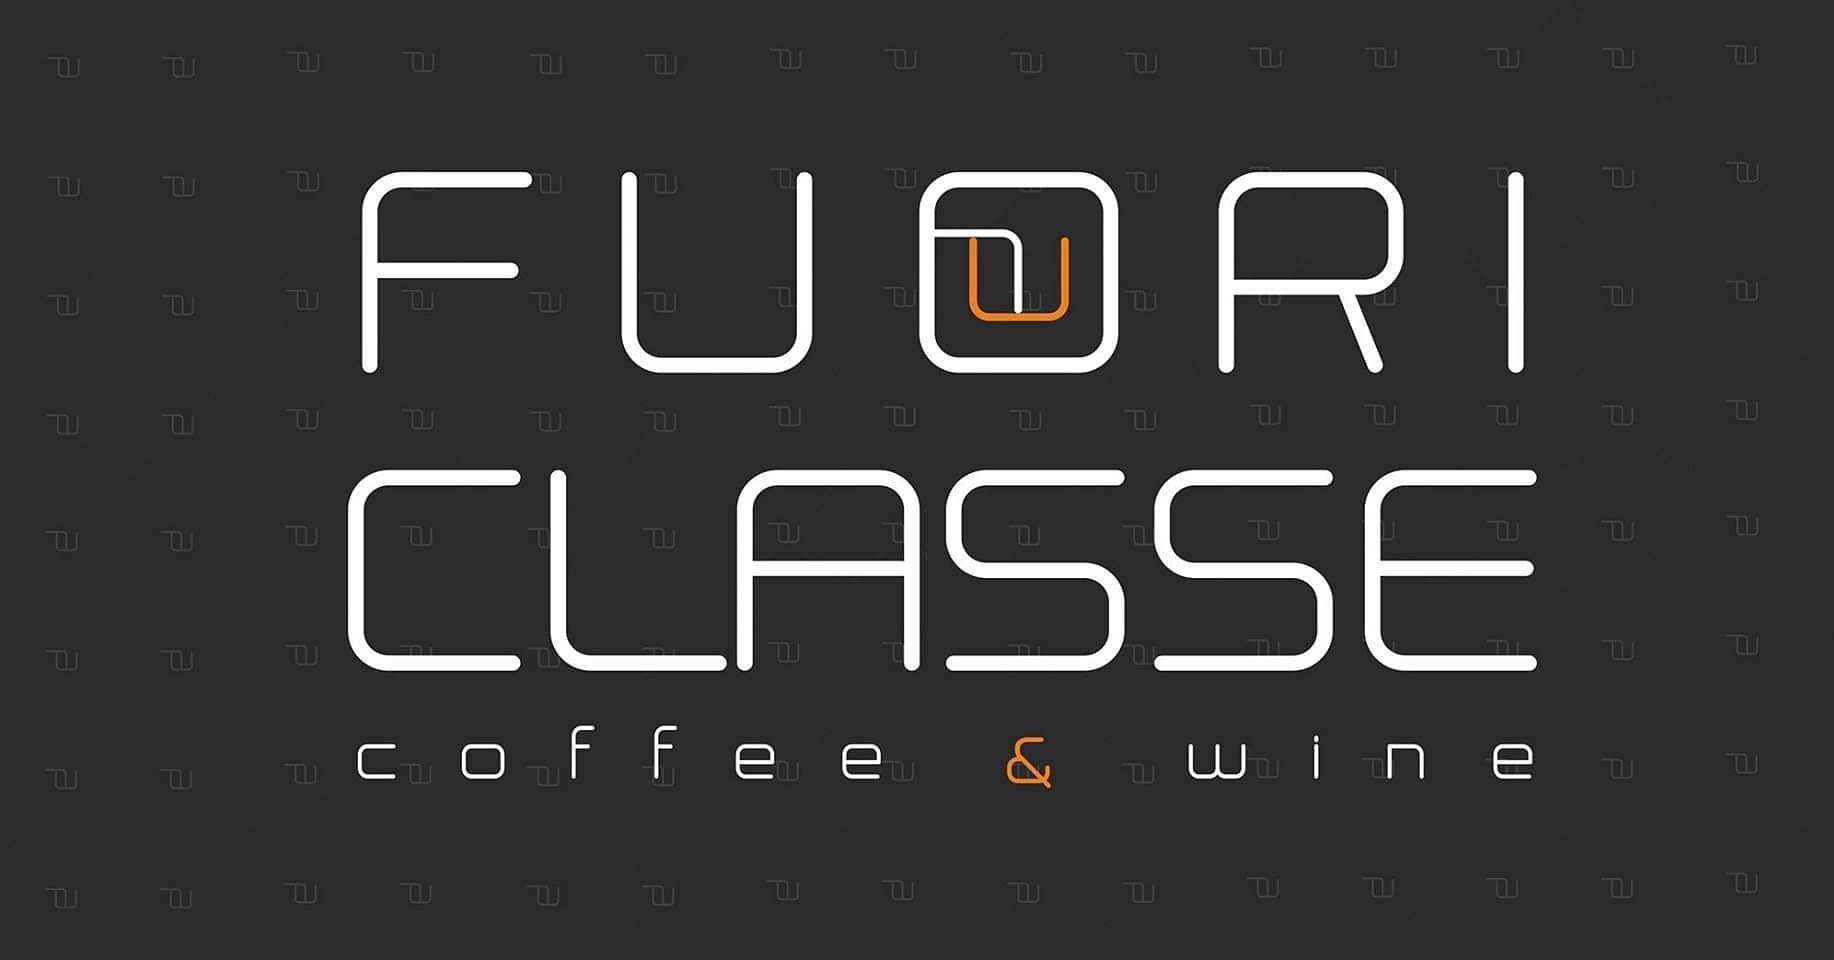 Fuori Classe Coffee & Wime